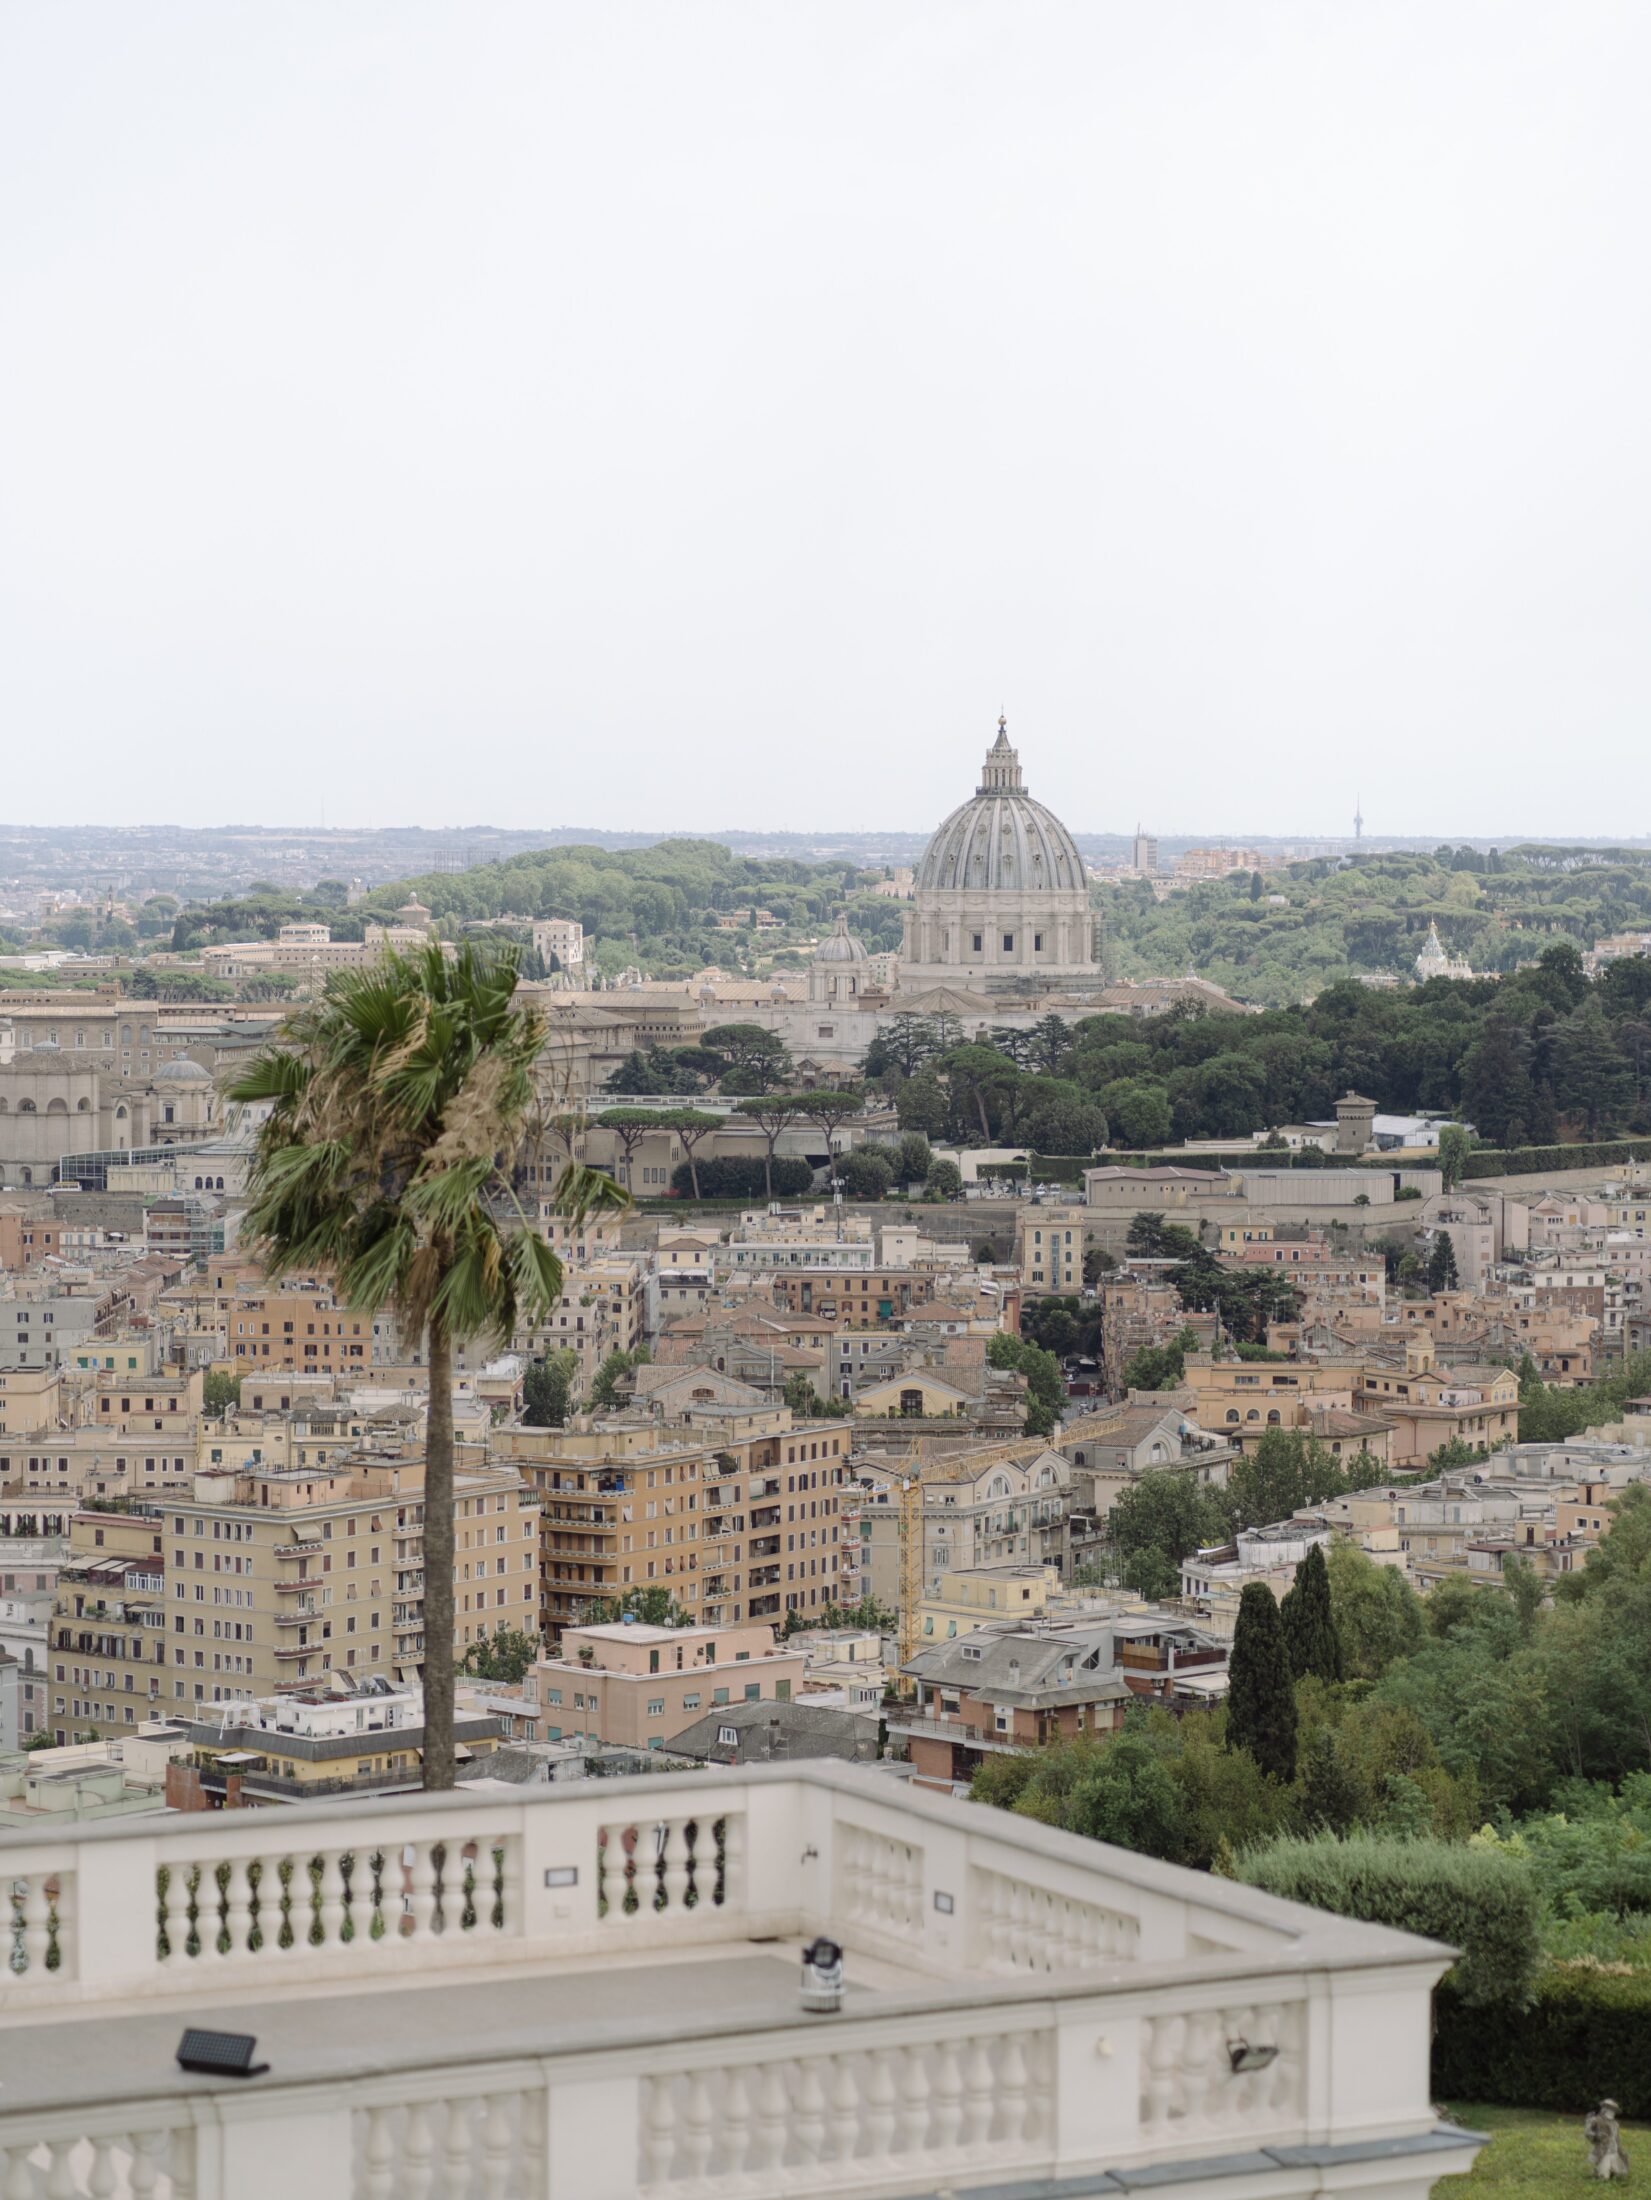 Wedding Overlooking Rome's Skyline